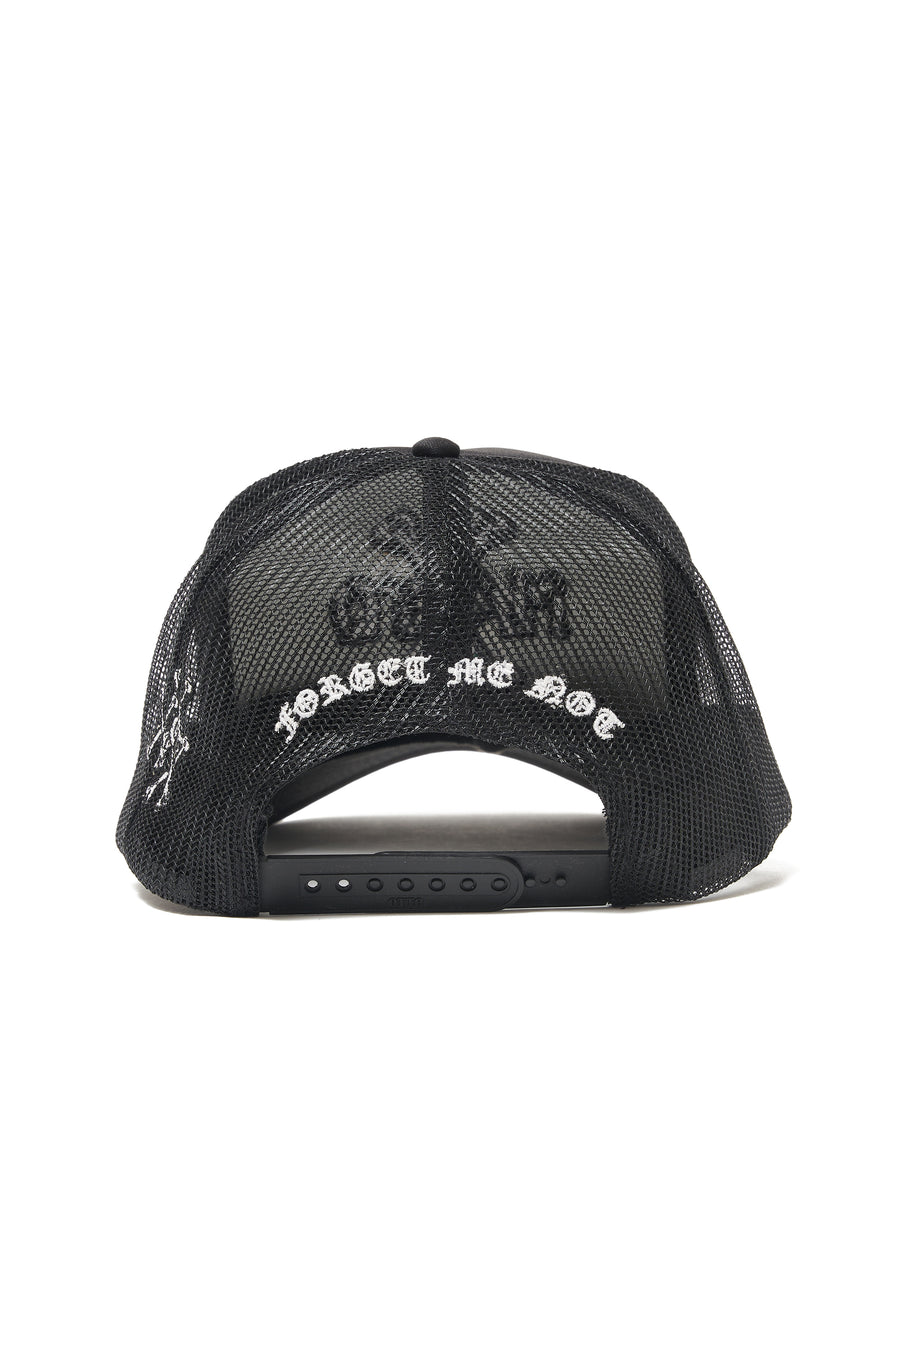 MAYO CROSS BONE Embroidery Mesh CAP - BLACK